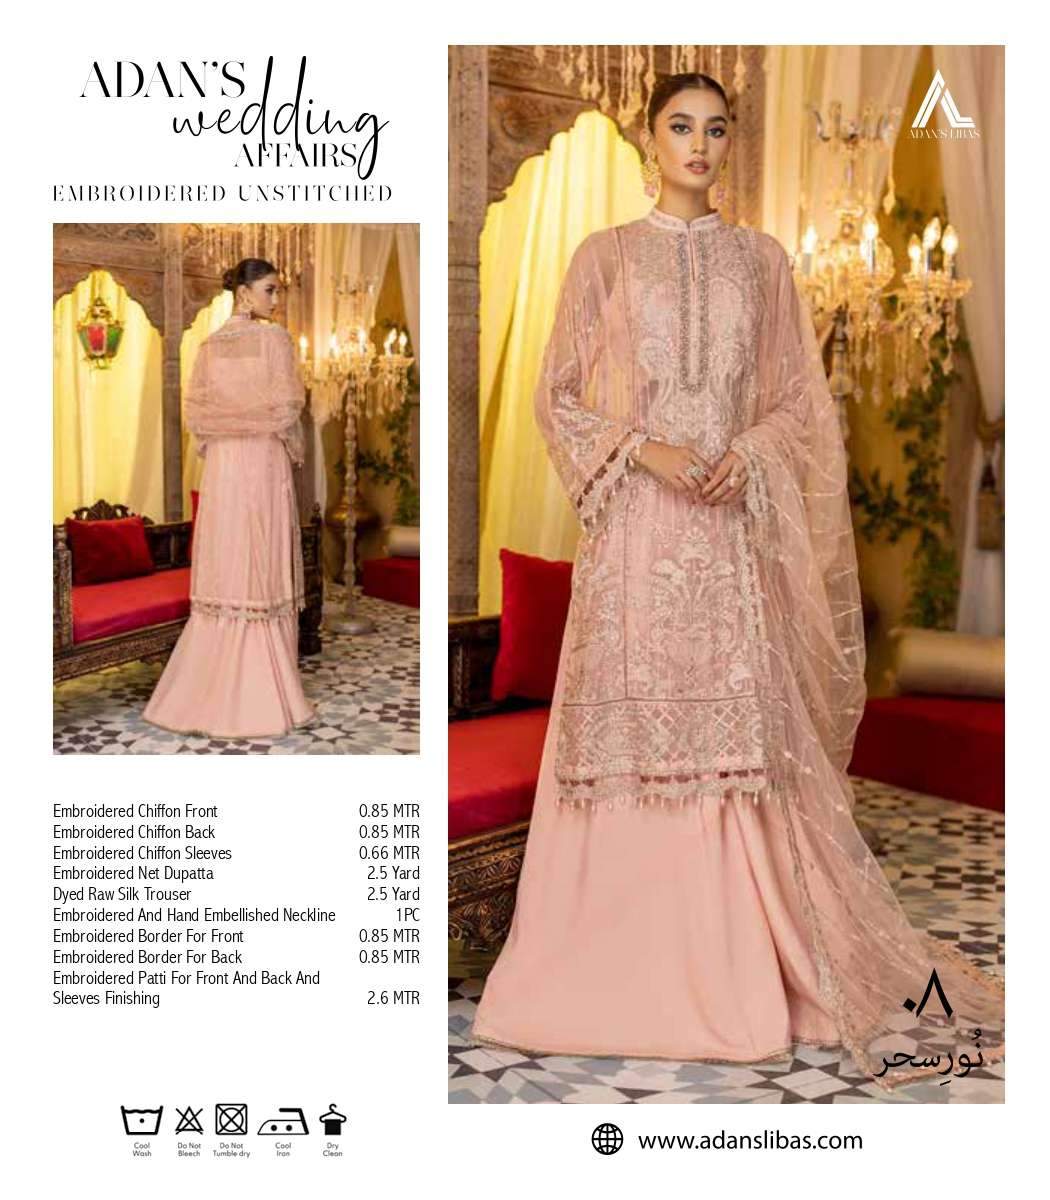 2022 11 30 18 19 44 adans wedding affairs fashid wholesale pakistani wholesaleprice 03